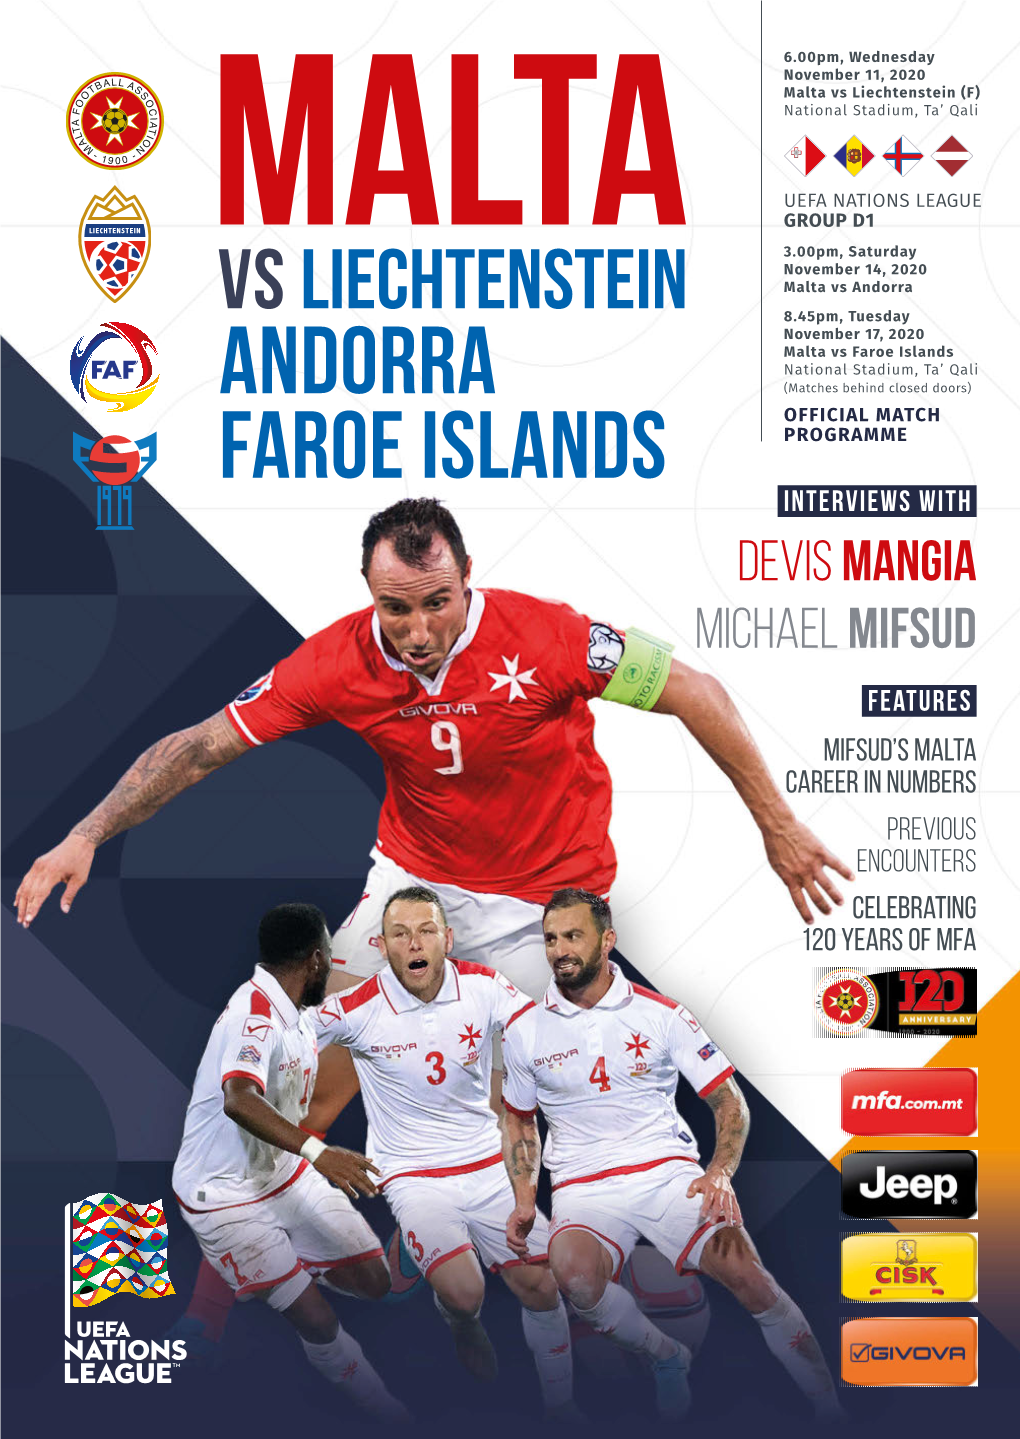 Andorra Faroe Islands 3-2 Malta GOALS: 1-0 Klæmint Olsen 26, 1-1 Jurgen Degabriele 38, 1-2 Andrei Agius 74, 2-2 Andreas Olsen 88, 3-2 Brandur Hendriksson 90+1